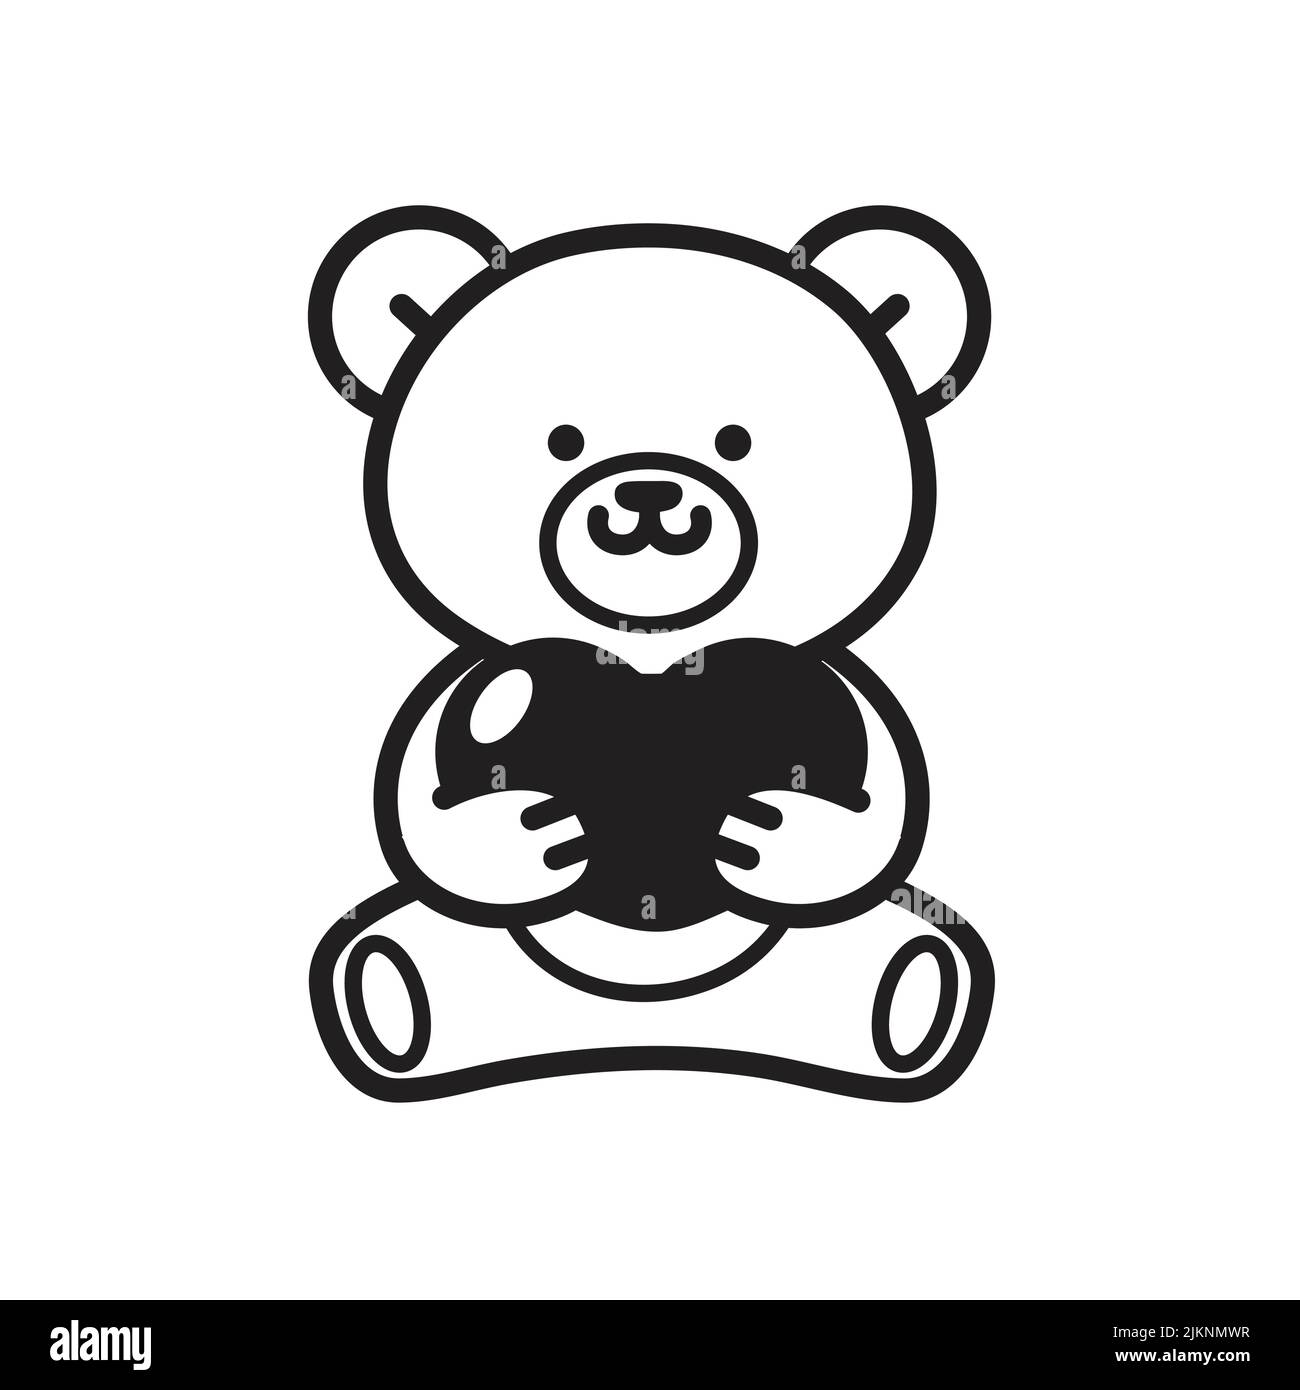 Teddy bear holding heart black and white vector icon Stock Vector